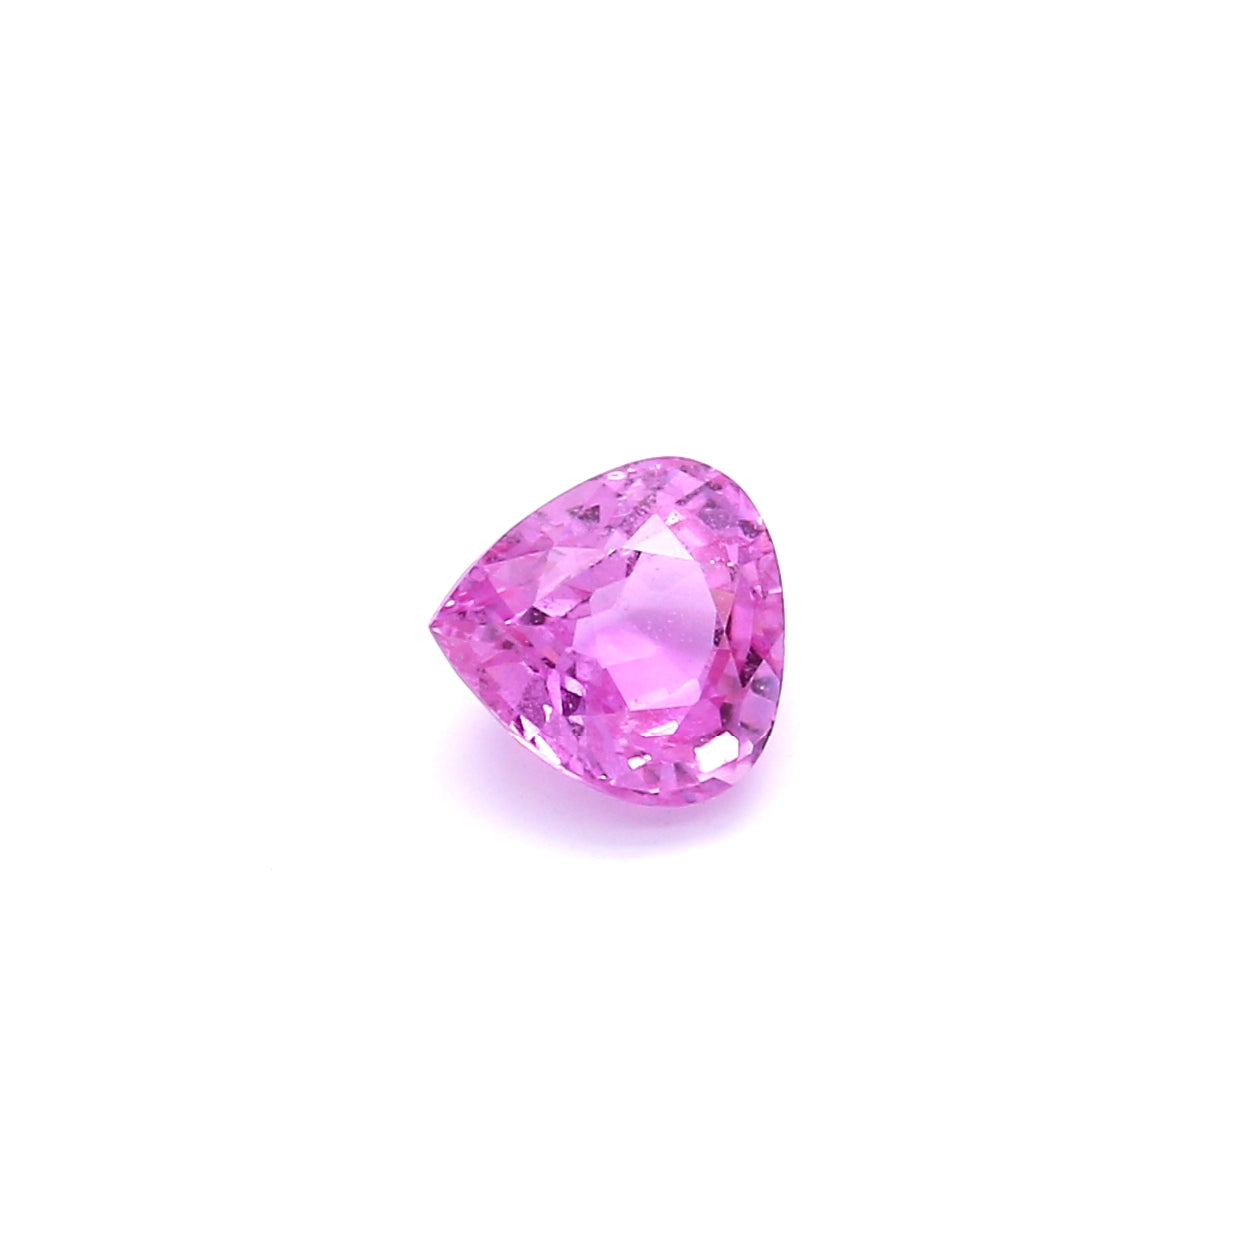 1.23ct Pink, Pear Shape Sapphire, Heated, Madagascar - 6.31 x 6.22 x 3.83mm